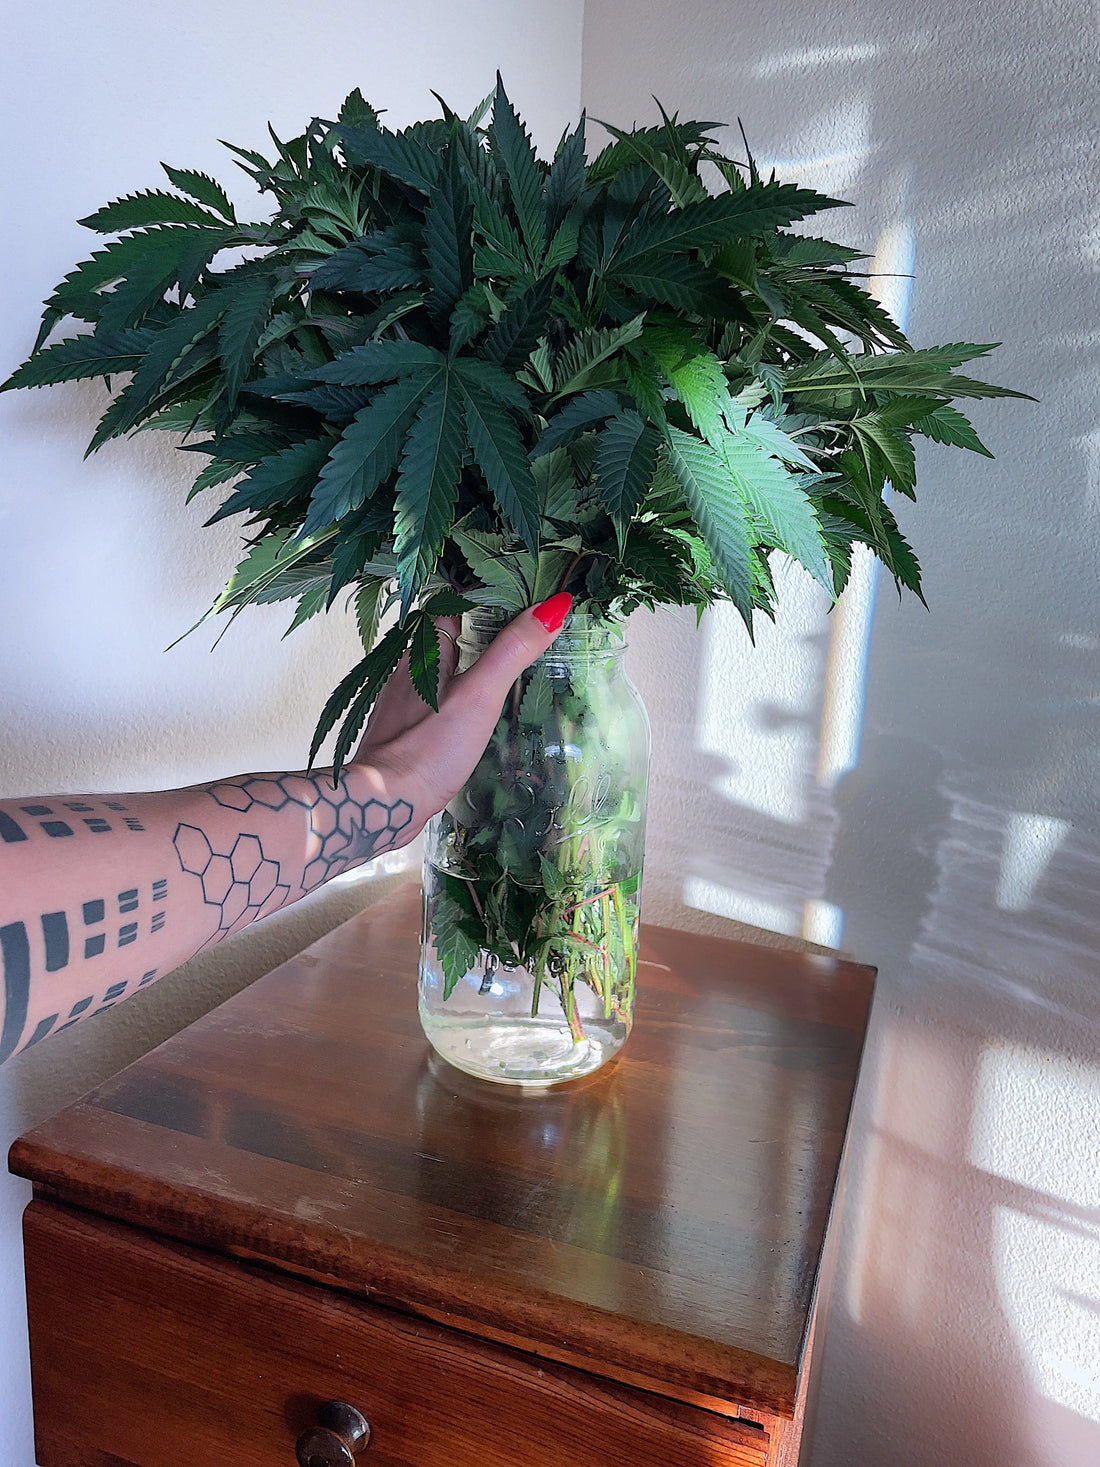 Hemp CBD Leaf Flower Clone Cutting Bouquet Fresh Organic Home Decorative Valentines Gift Holistic